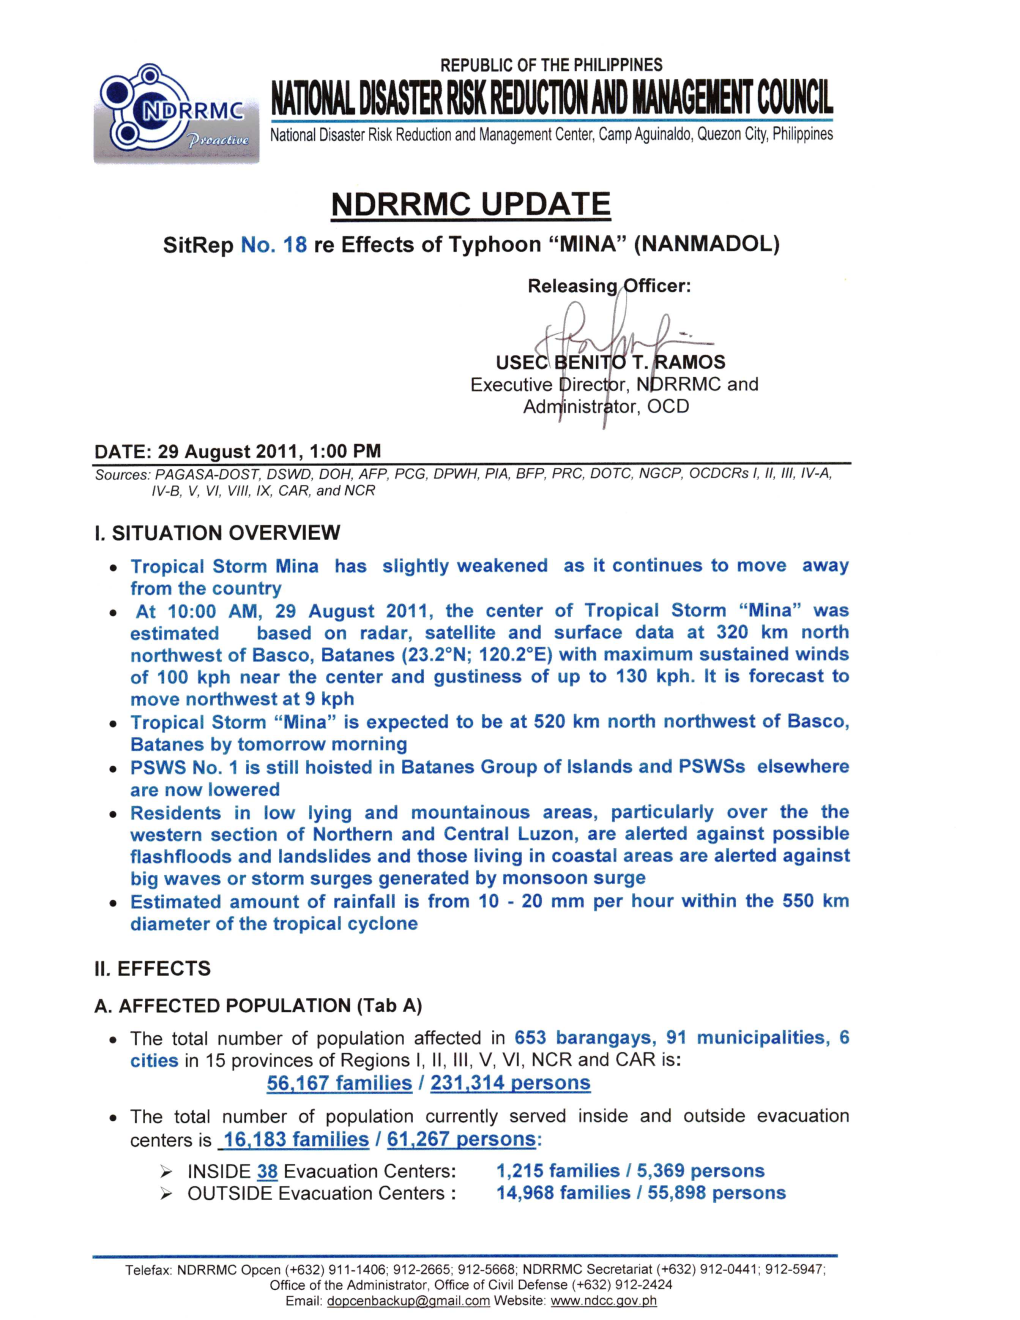 NDRRMC Update Sitrep No. 18 Re Effects of Typhoon MINA